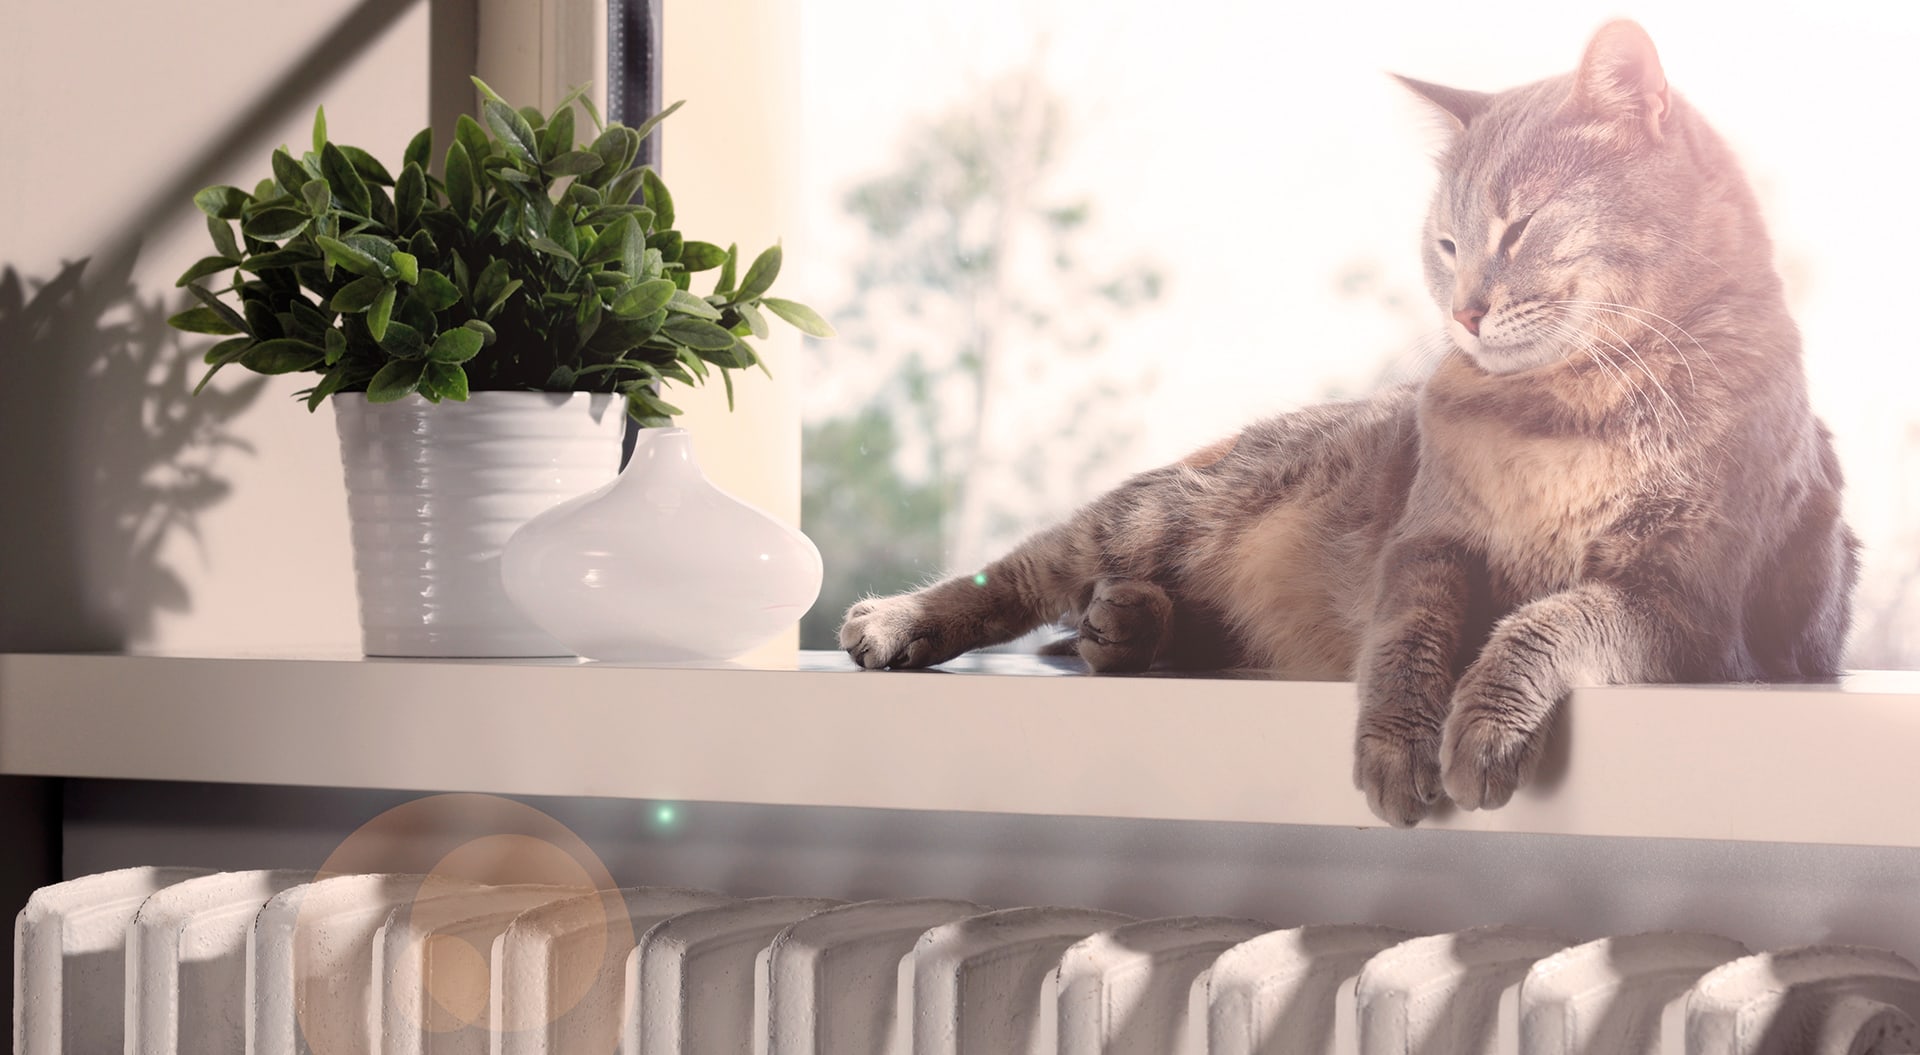 Cat on a radiator